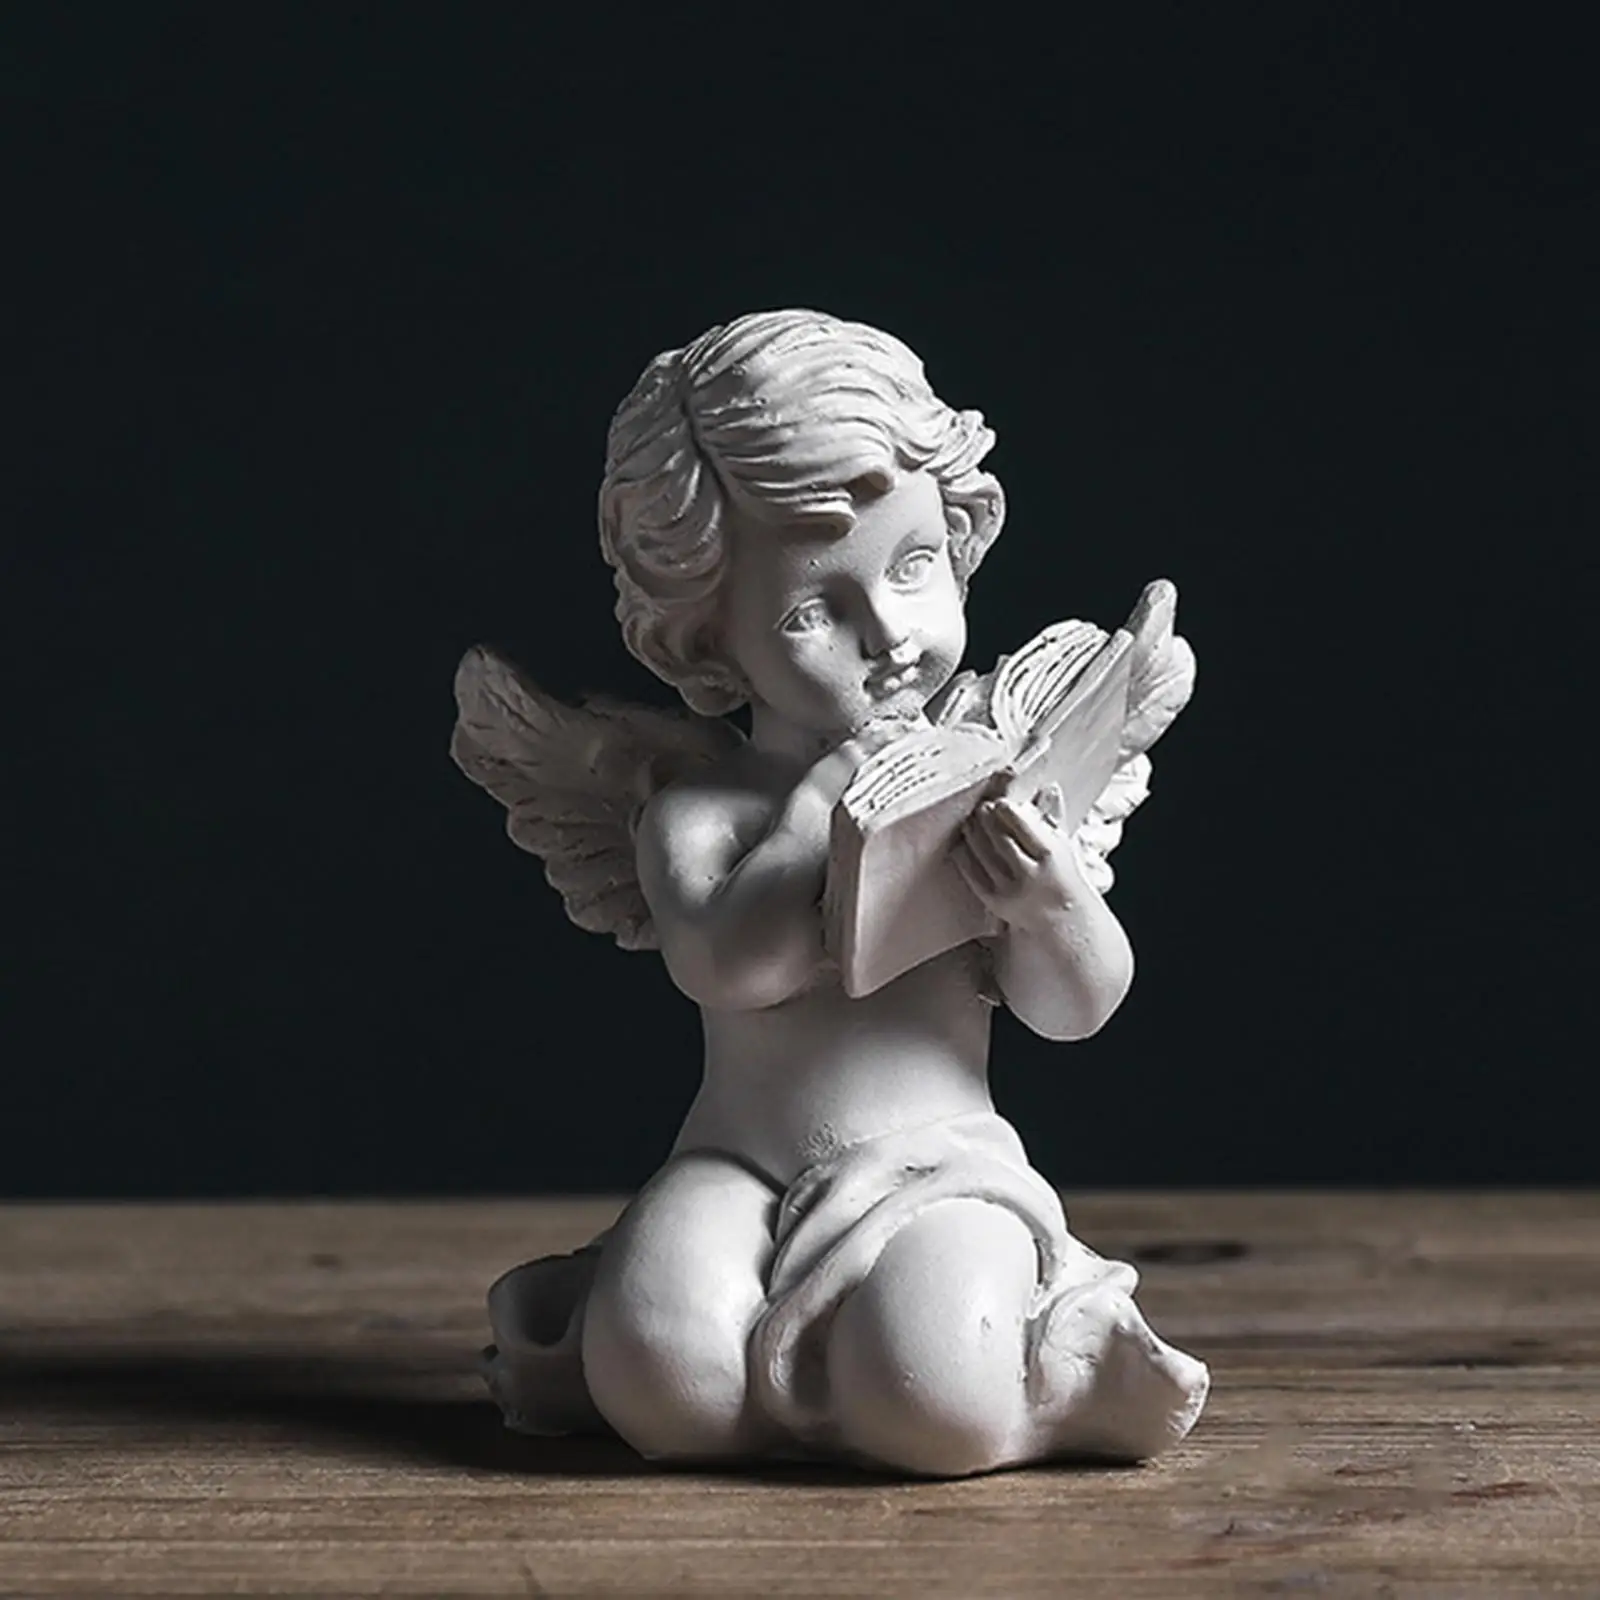 Resin Sculpture Cherub Figurines Artwork Desk Figure Baby Angel Statue for Cabinet Bookshelf Decoration Home Church Ornament